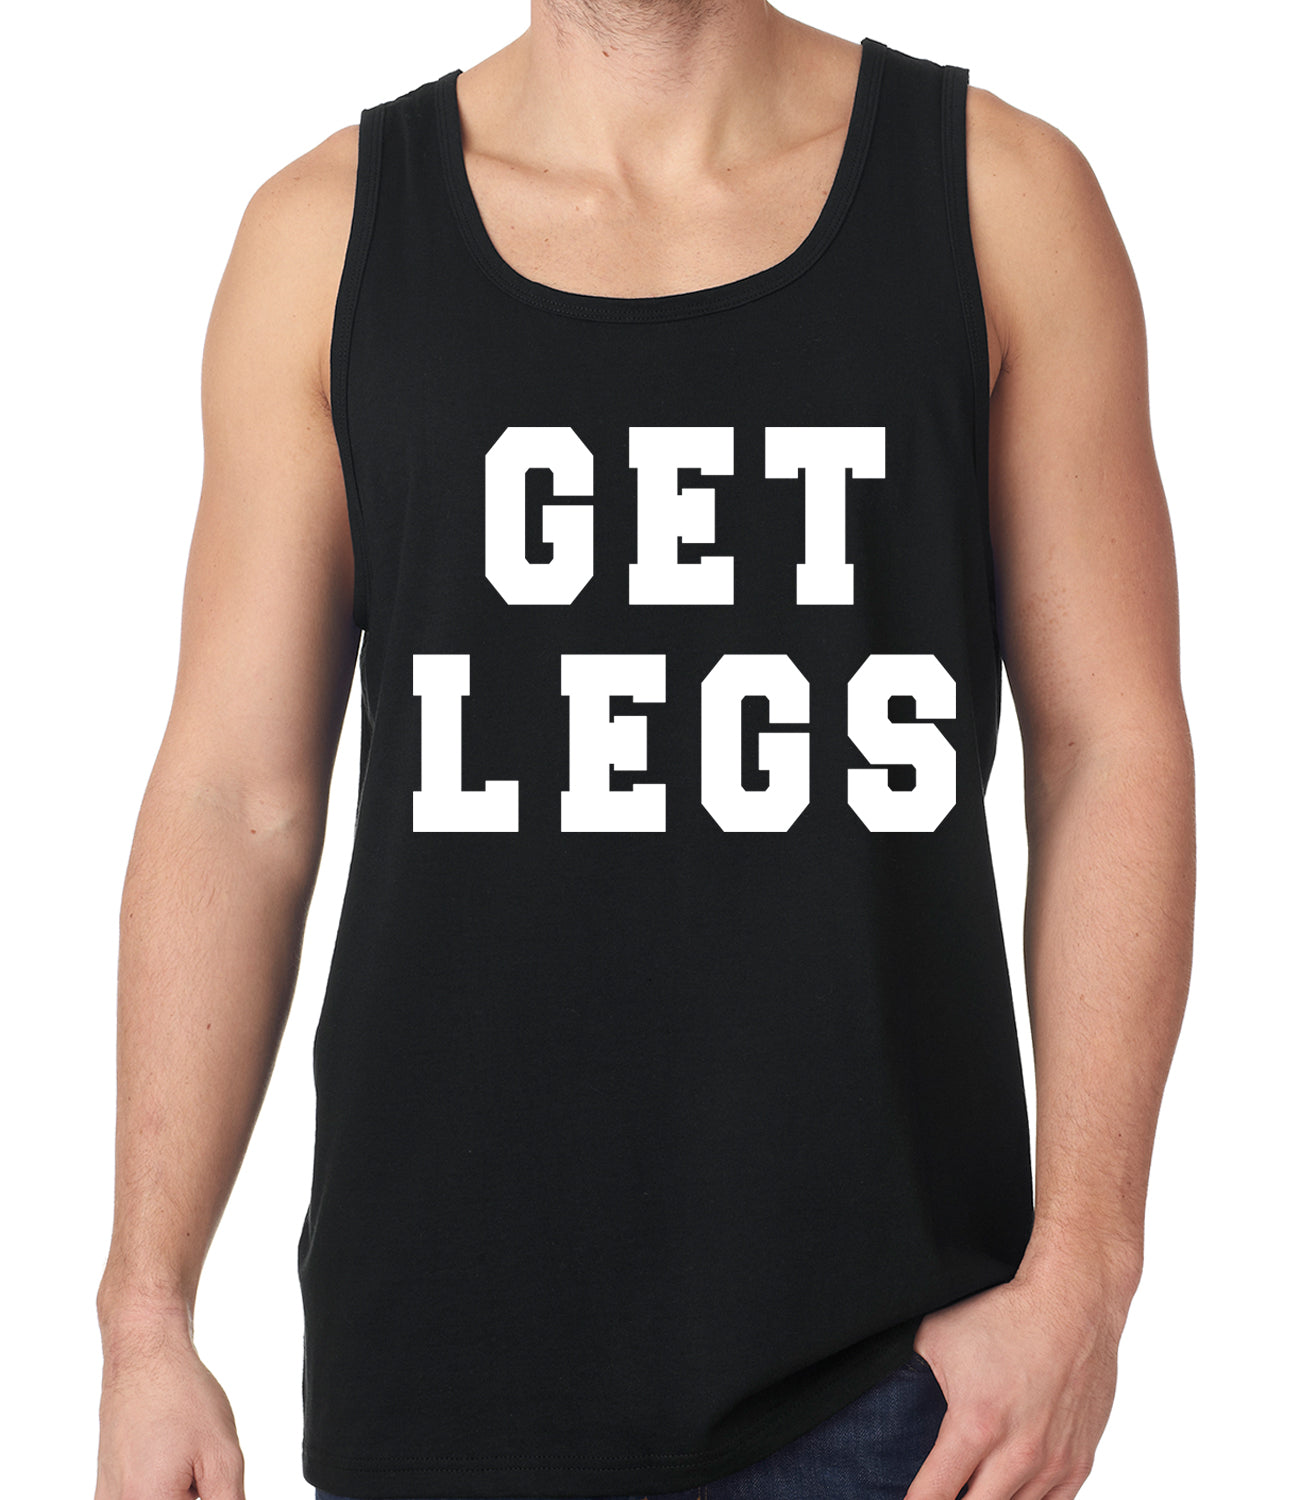 Get Legs Tank Top